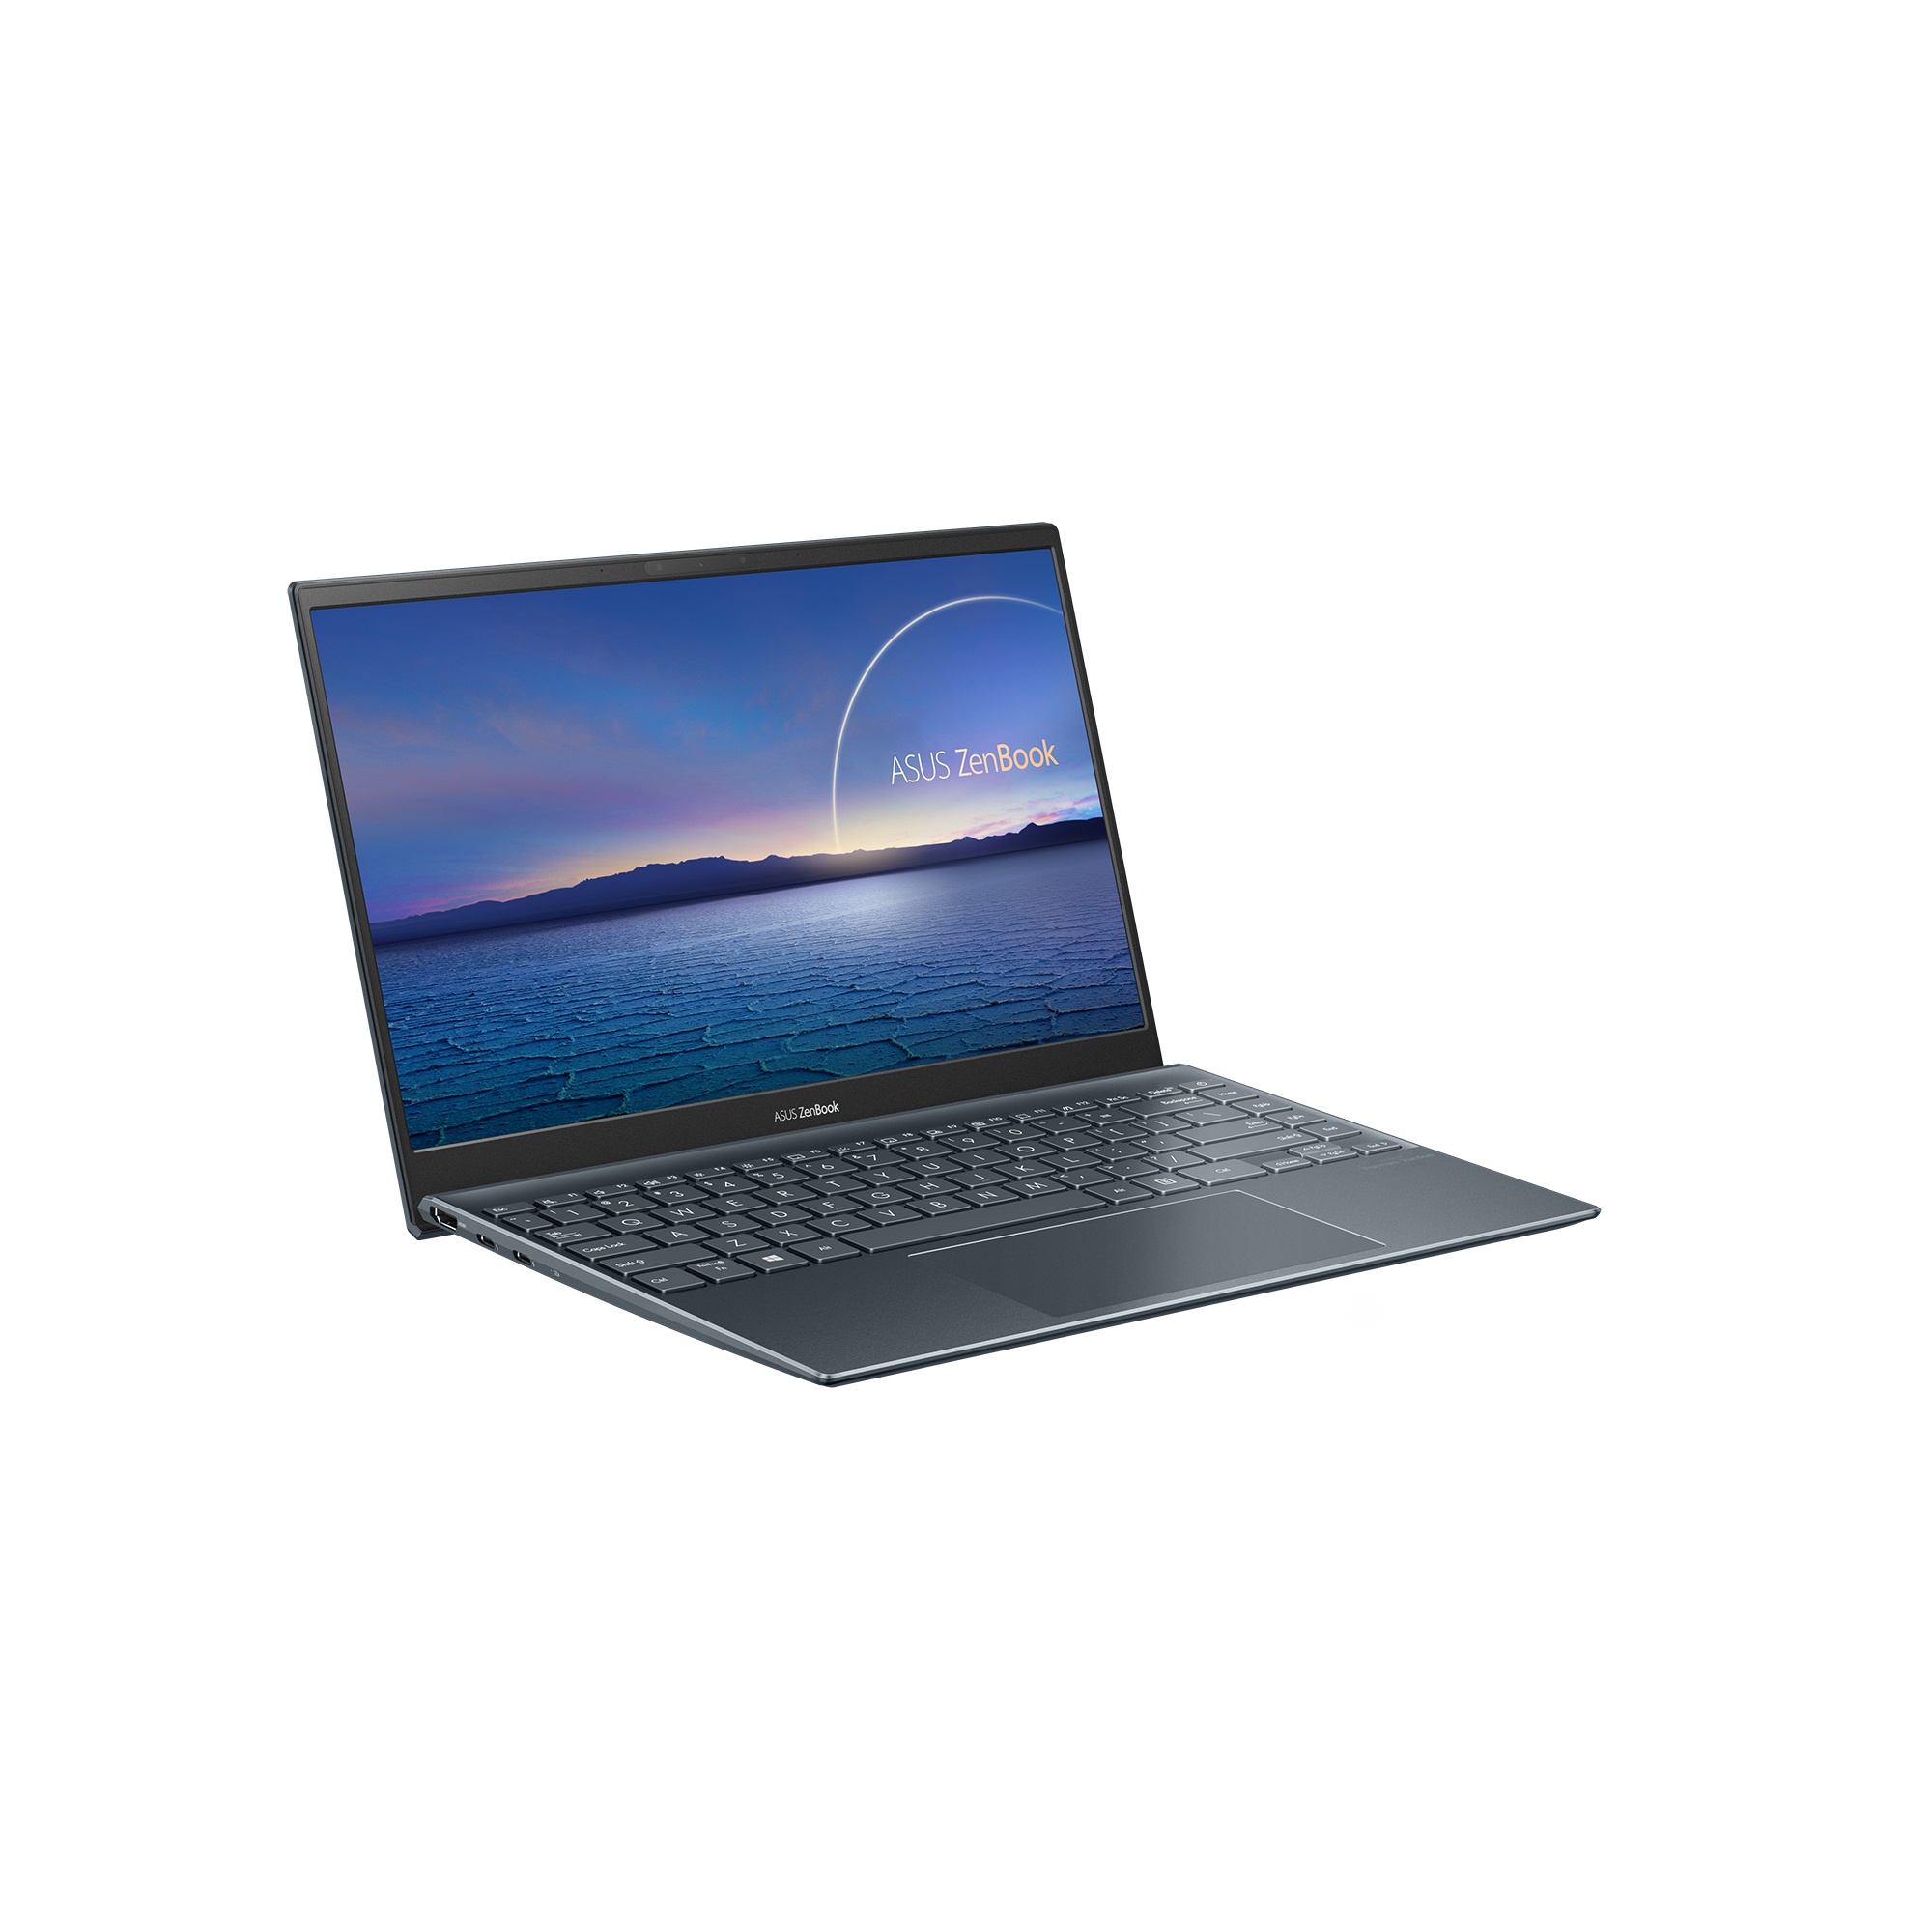 Notebook ASUS ZenBook 14 UX425EA-KI584R Computer portatile 35,6 cm (14